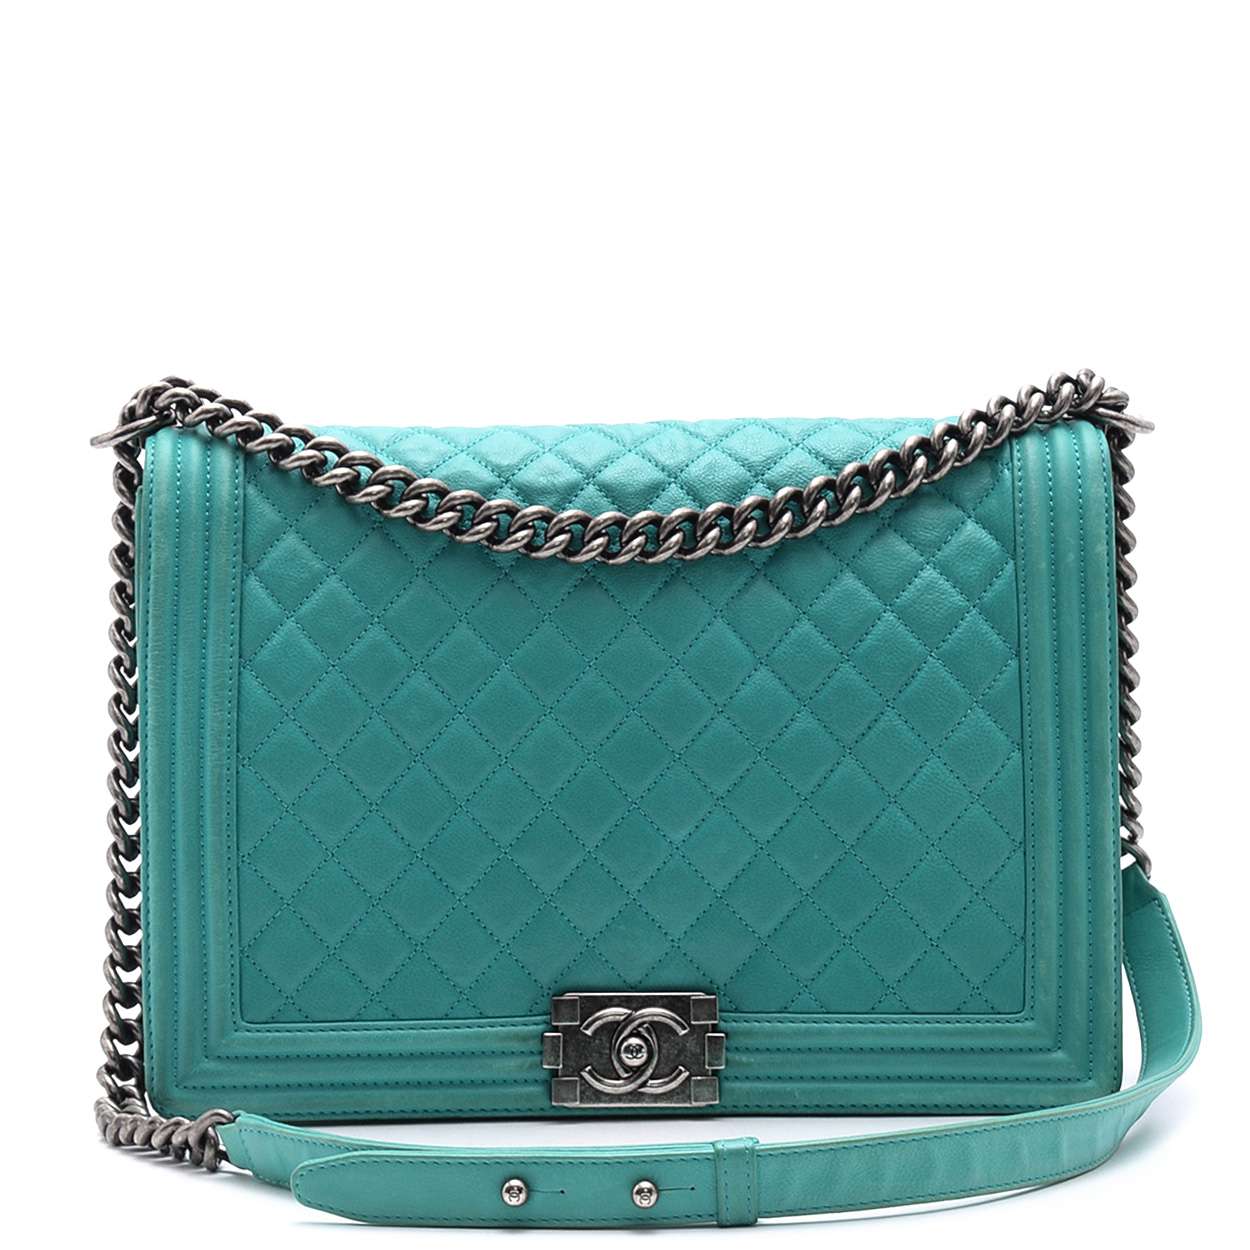 Chanel - Aqua Green Caviar Leather Large Le Boy Bag